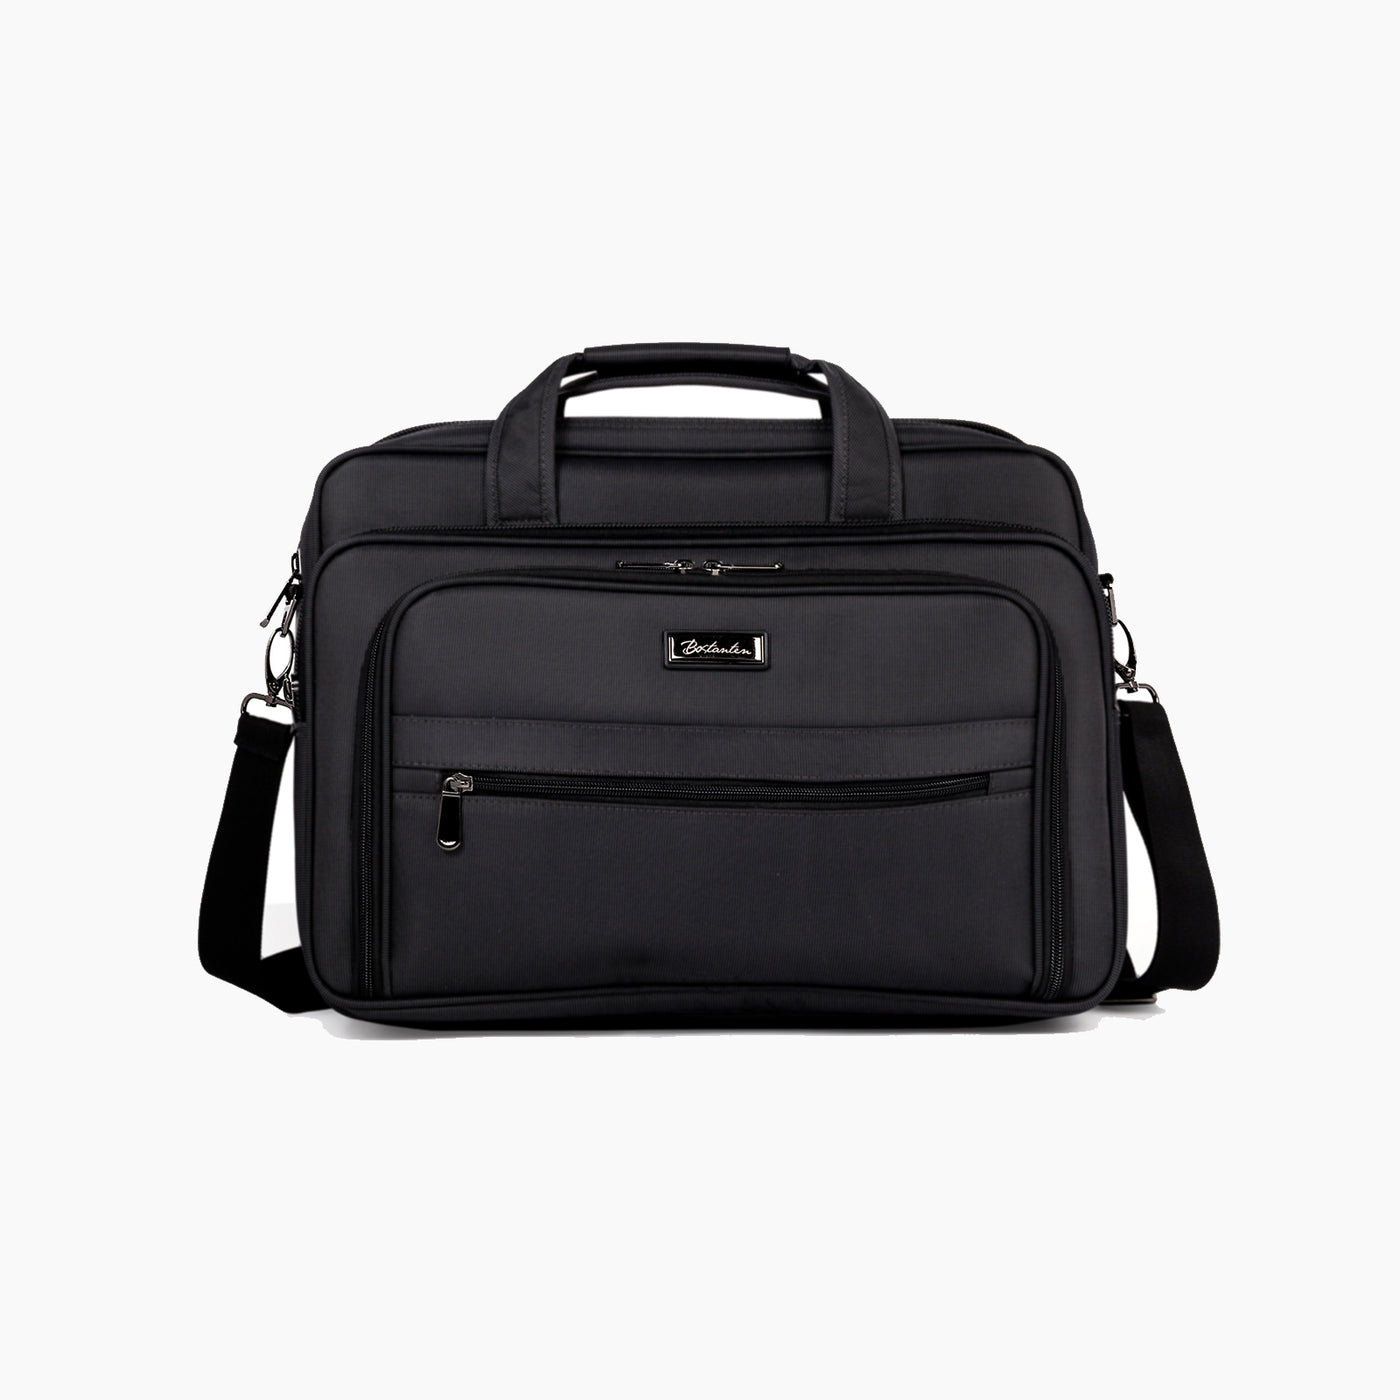  BOSTANTEN Briefcases for Men 17 inch Laptop Bag for